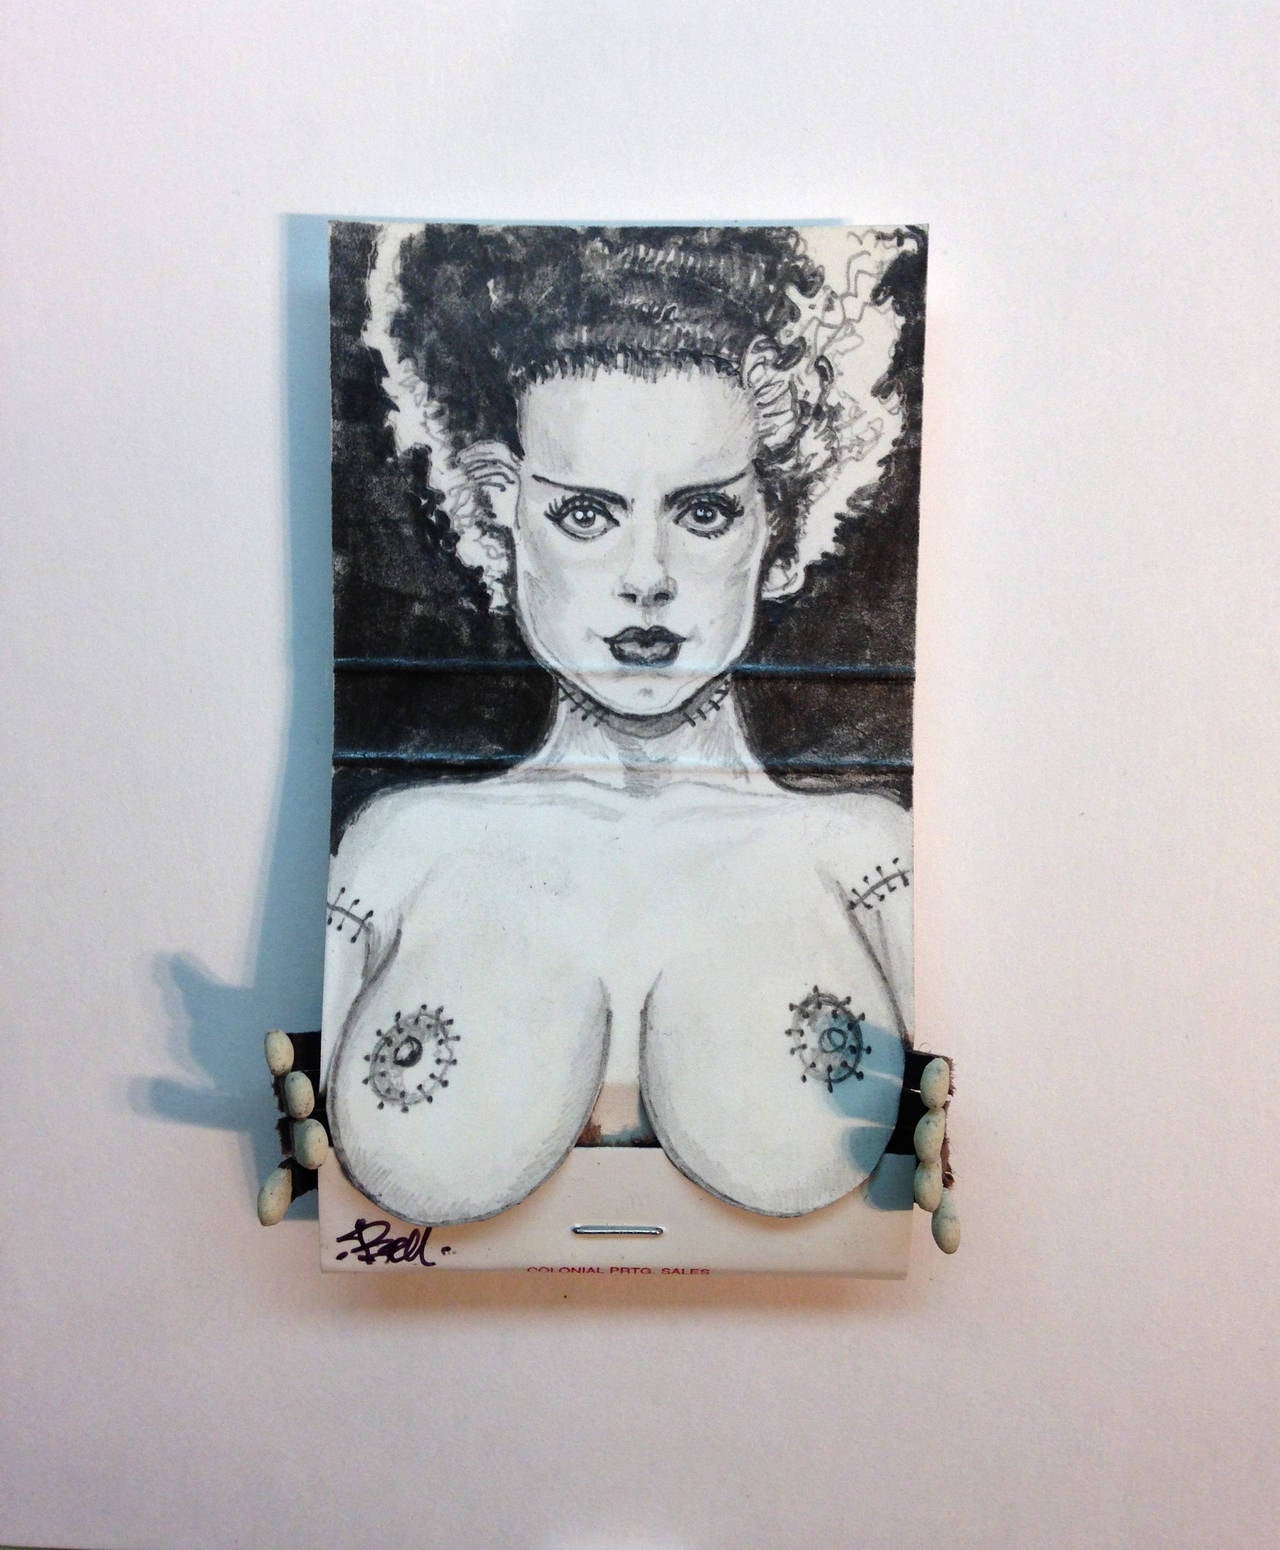 MB visual Portrait - Bride- black and white figurative nude portrait on matchbox